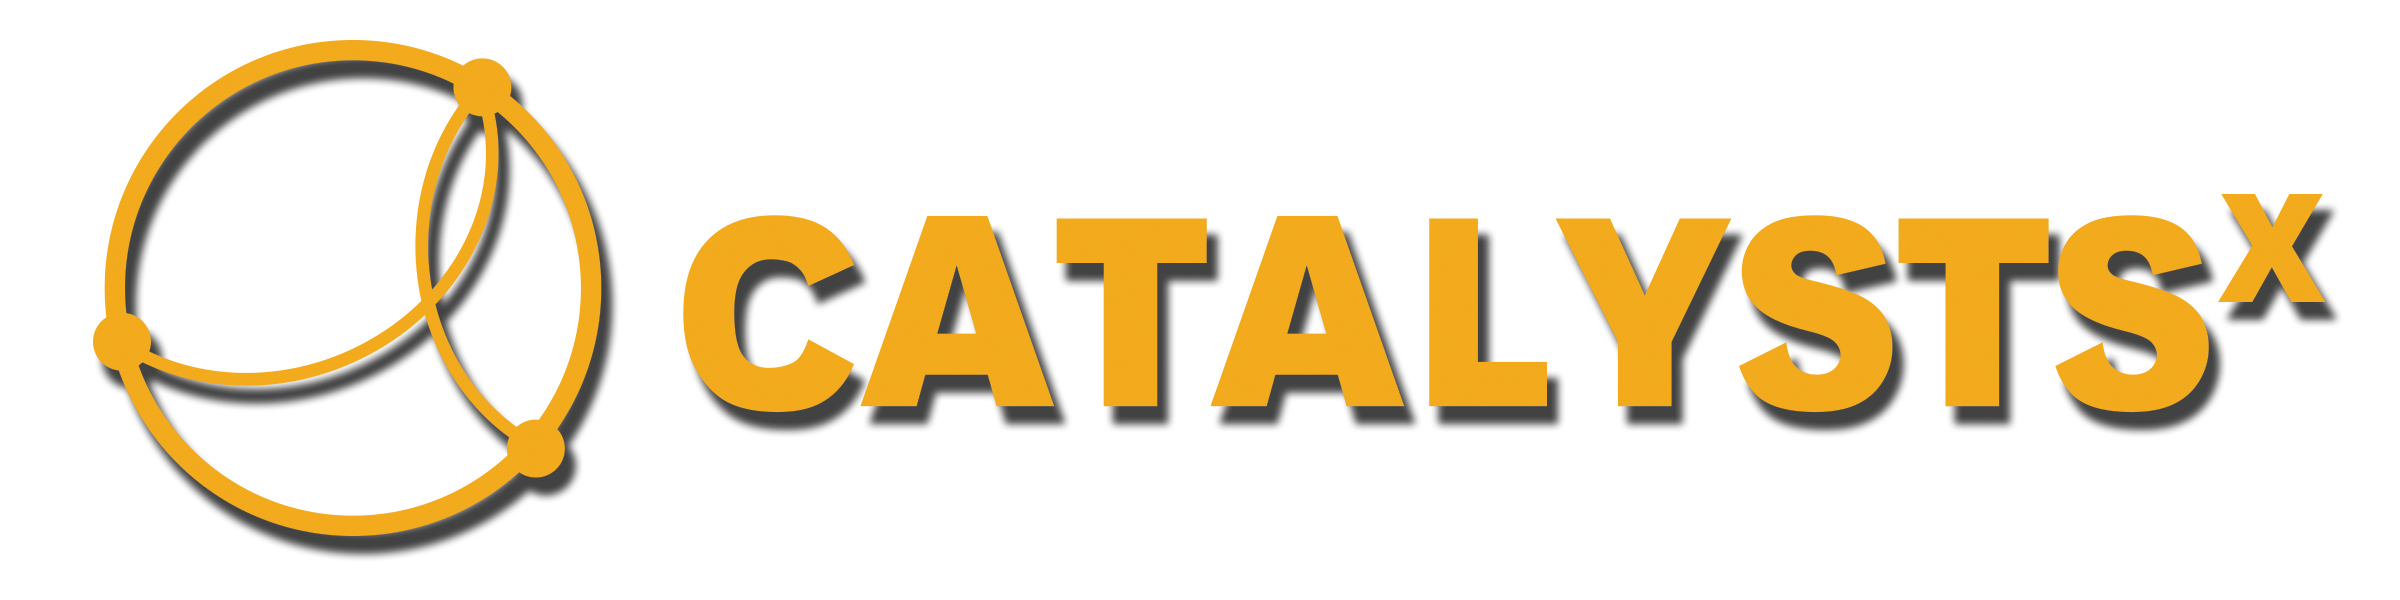 Catalyst x Logo.png